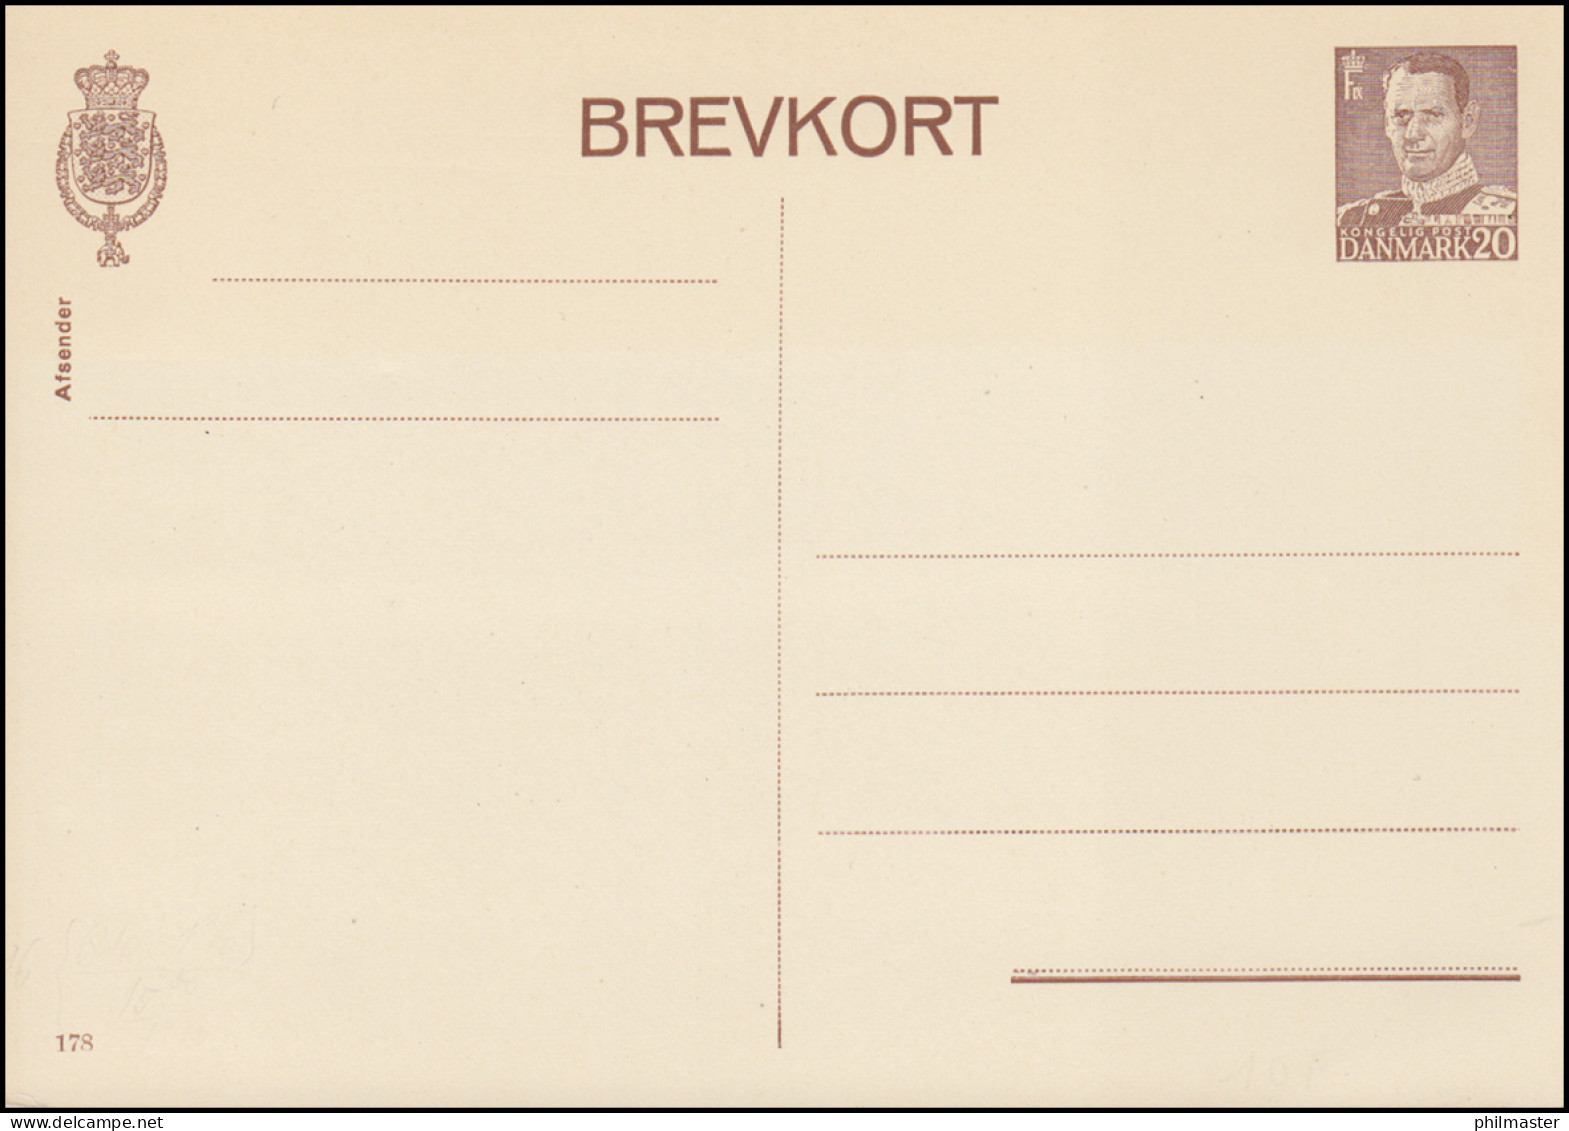 Dänemark Postkarte P 243I Frederik IX. 20 Öre, 4. Zeile Kurz, Kz. 178, ** - Enteros Postales